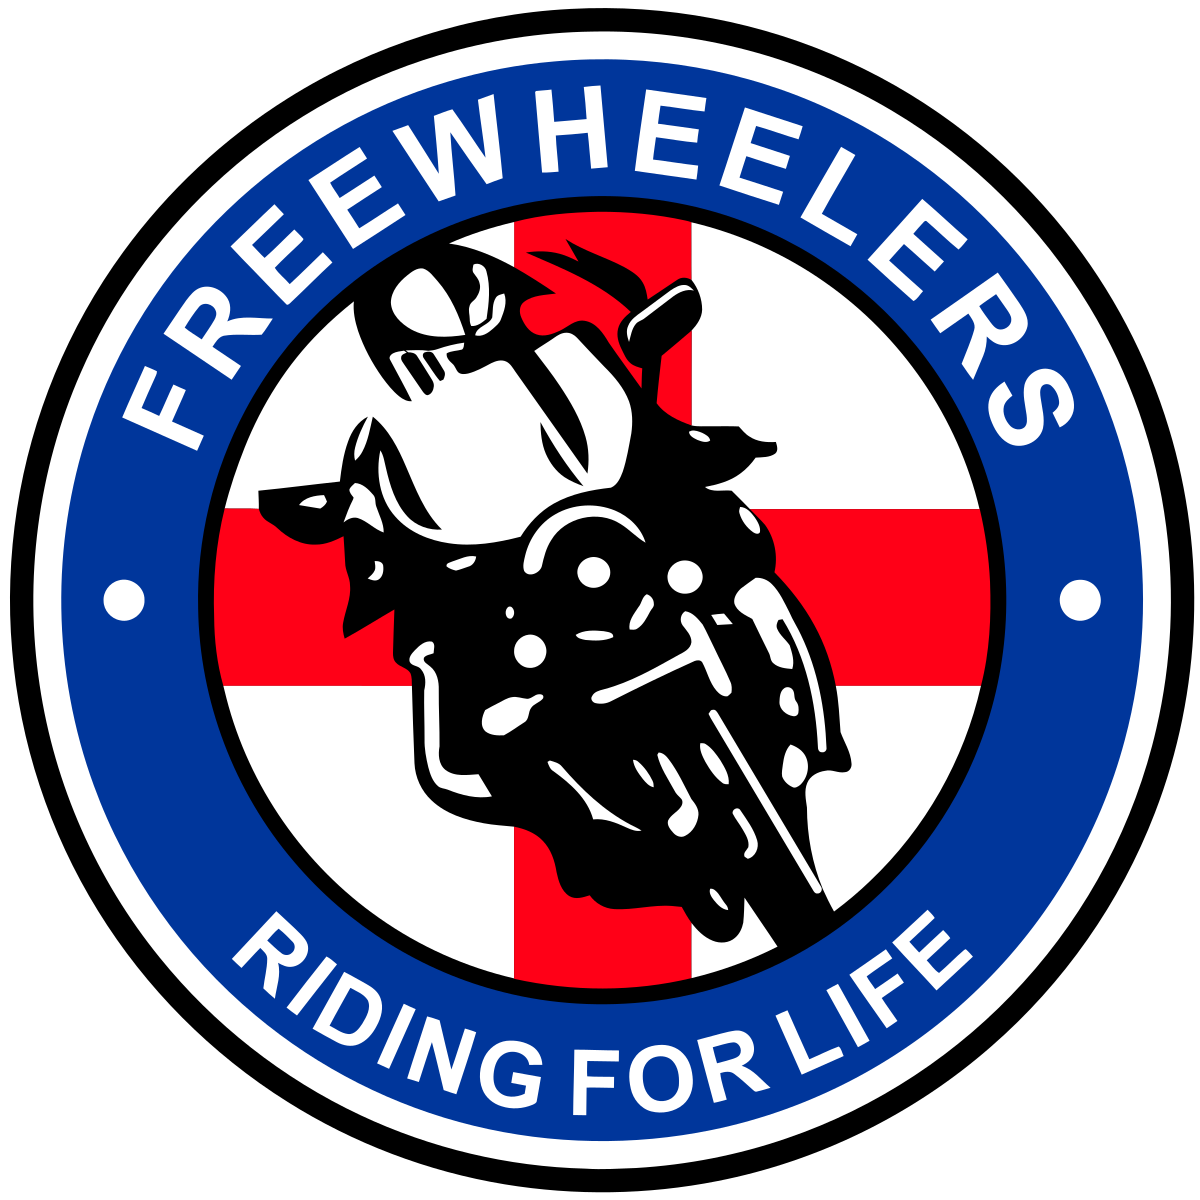 Freewheelers EVS - Wikipedia